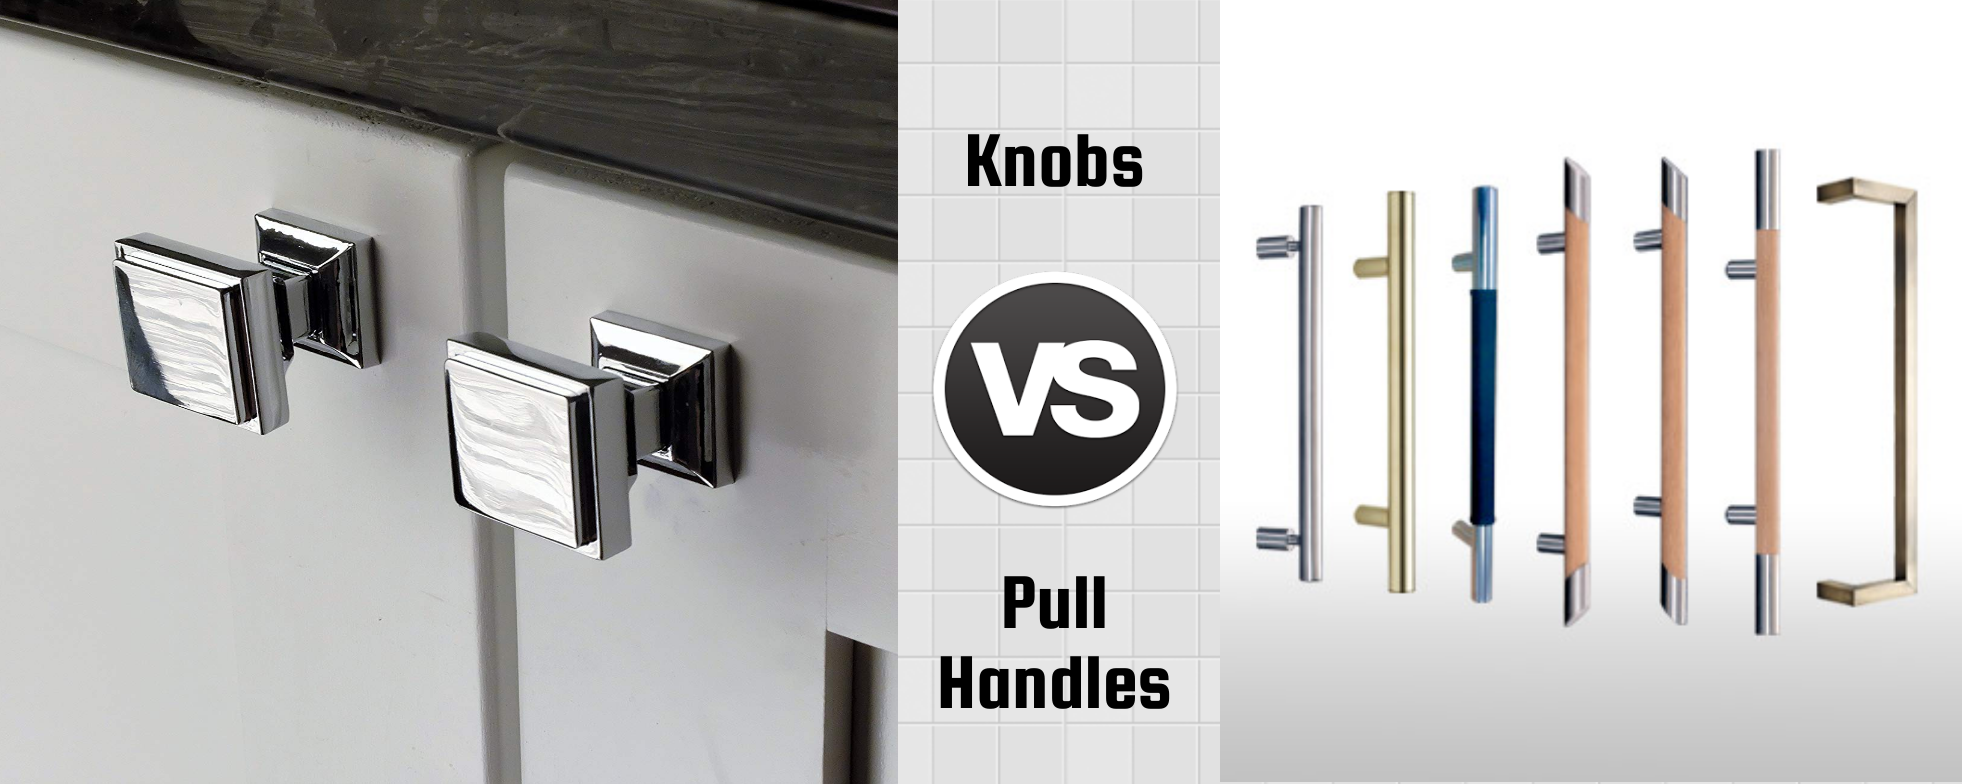 Knobs vs Pull Handles